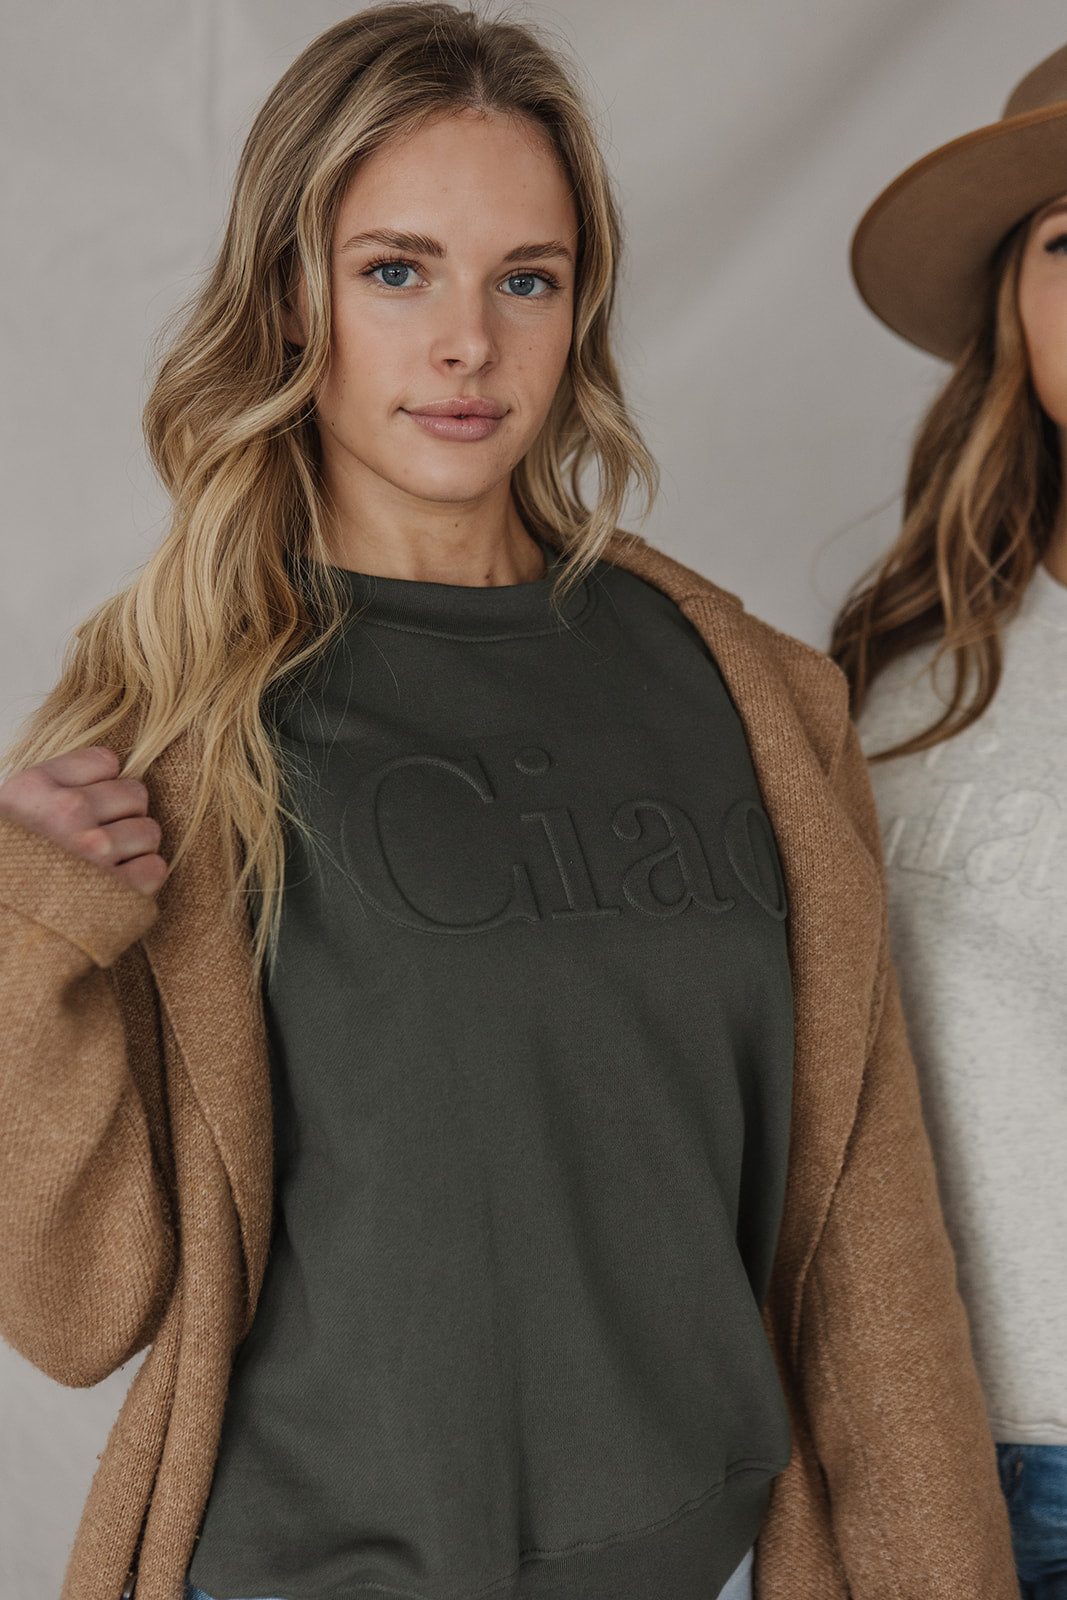 Ciao Sweatshirt| Sage